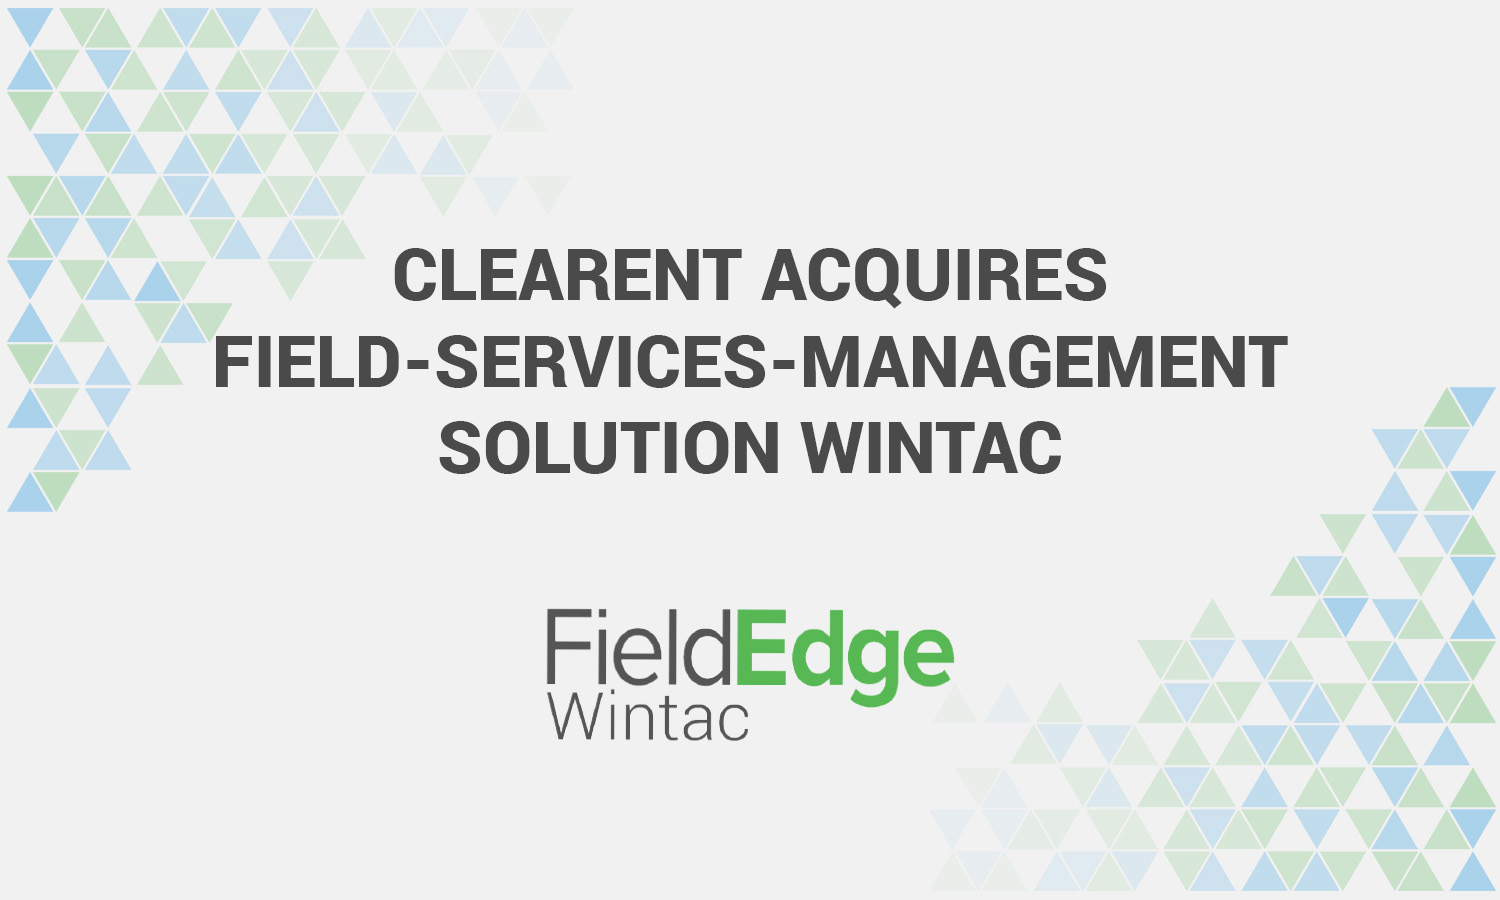 fieldedge wintac acquisition